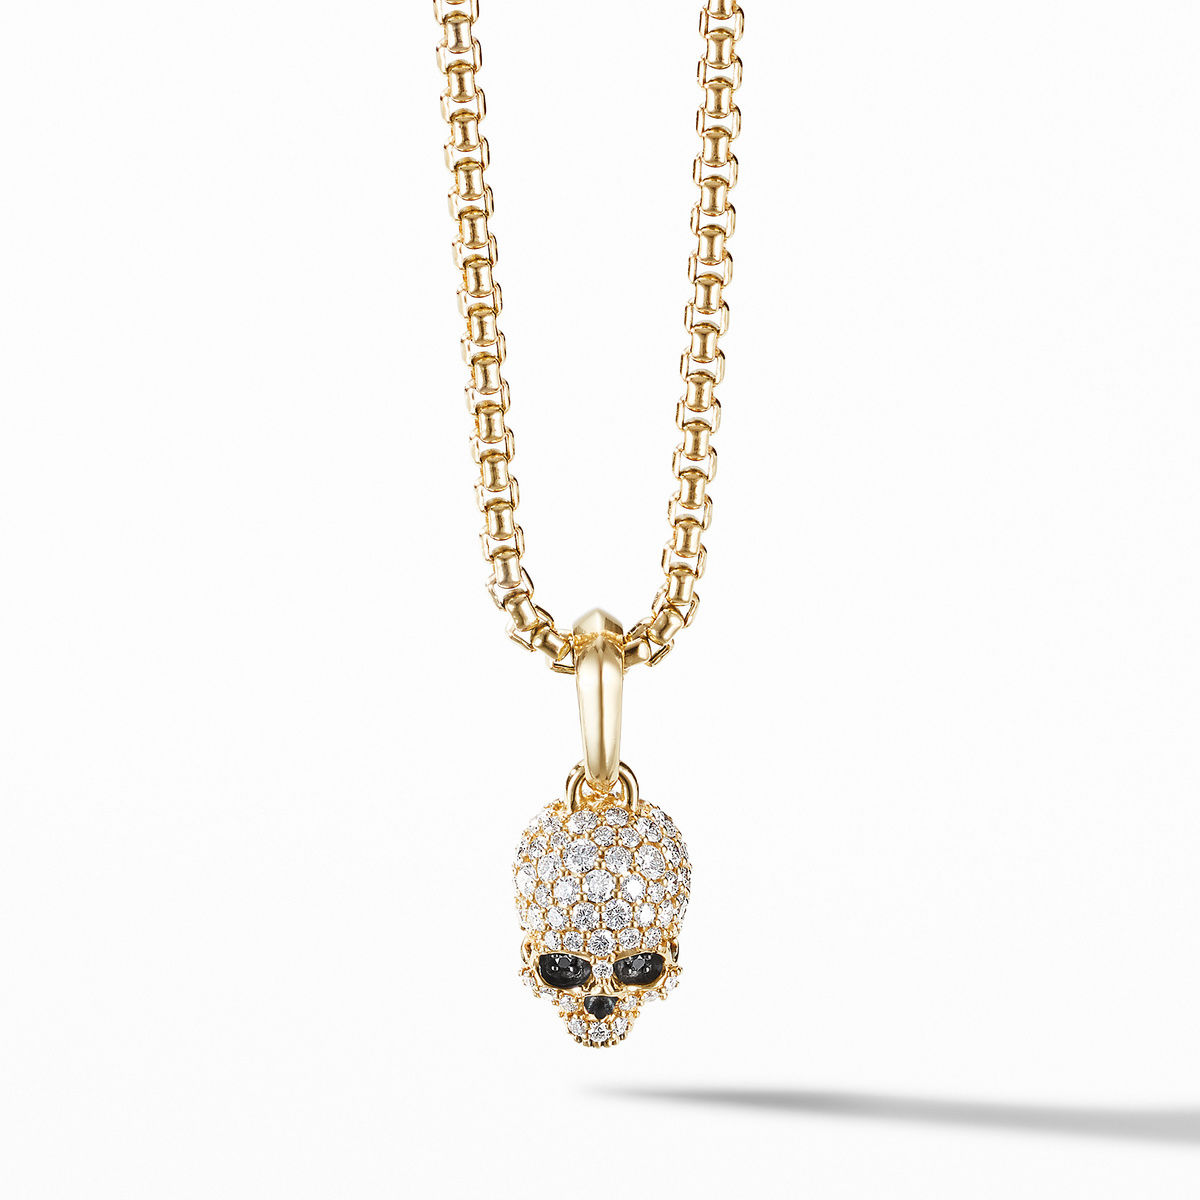 Men's David Yurman Skull Amulet with Full Pave Diamonds, Black Diamonds and 18K Yellow Gold